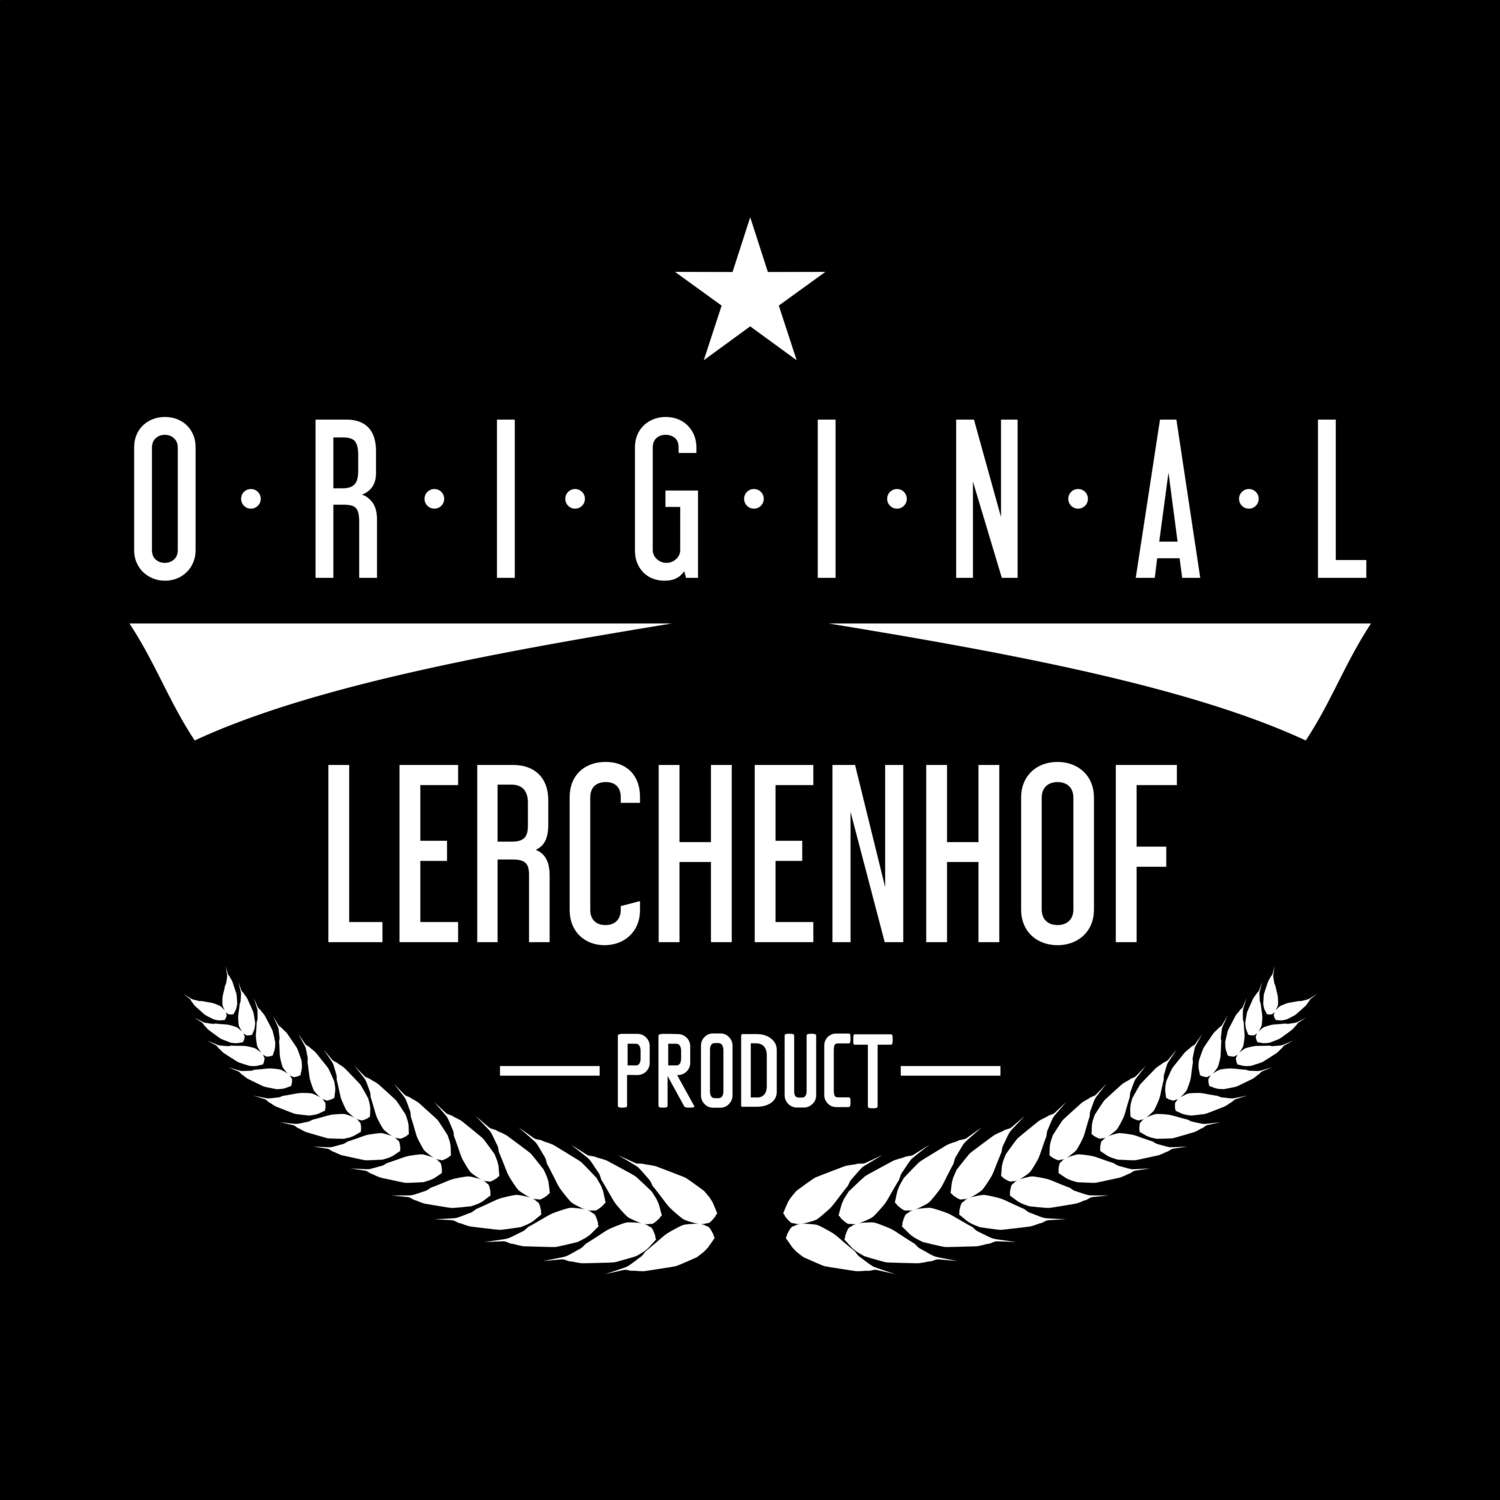 Lerchenhof T-Shirt »Original Product«